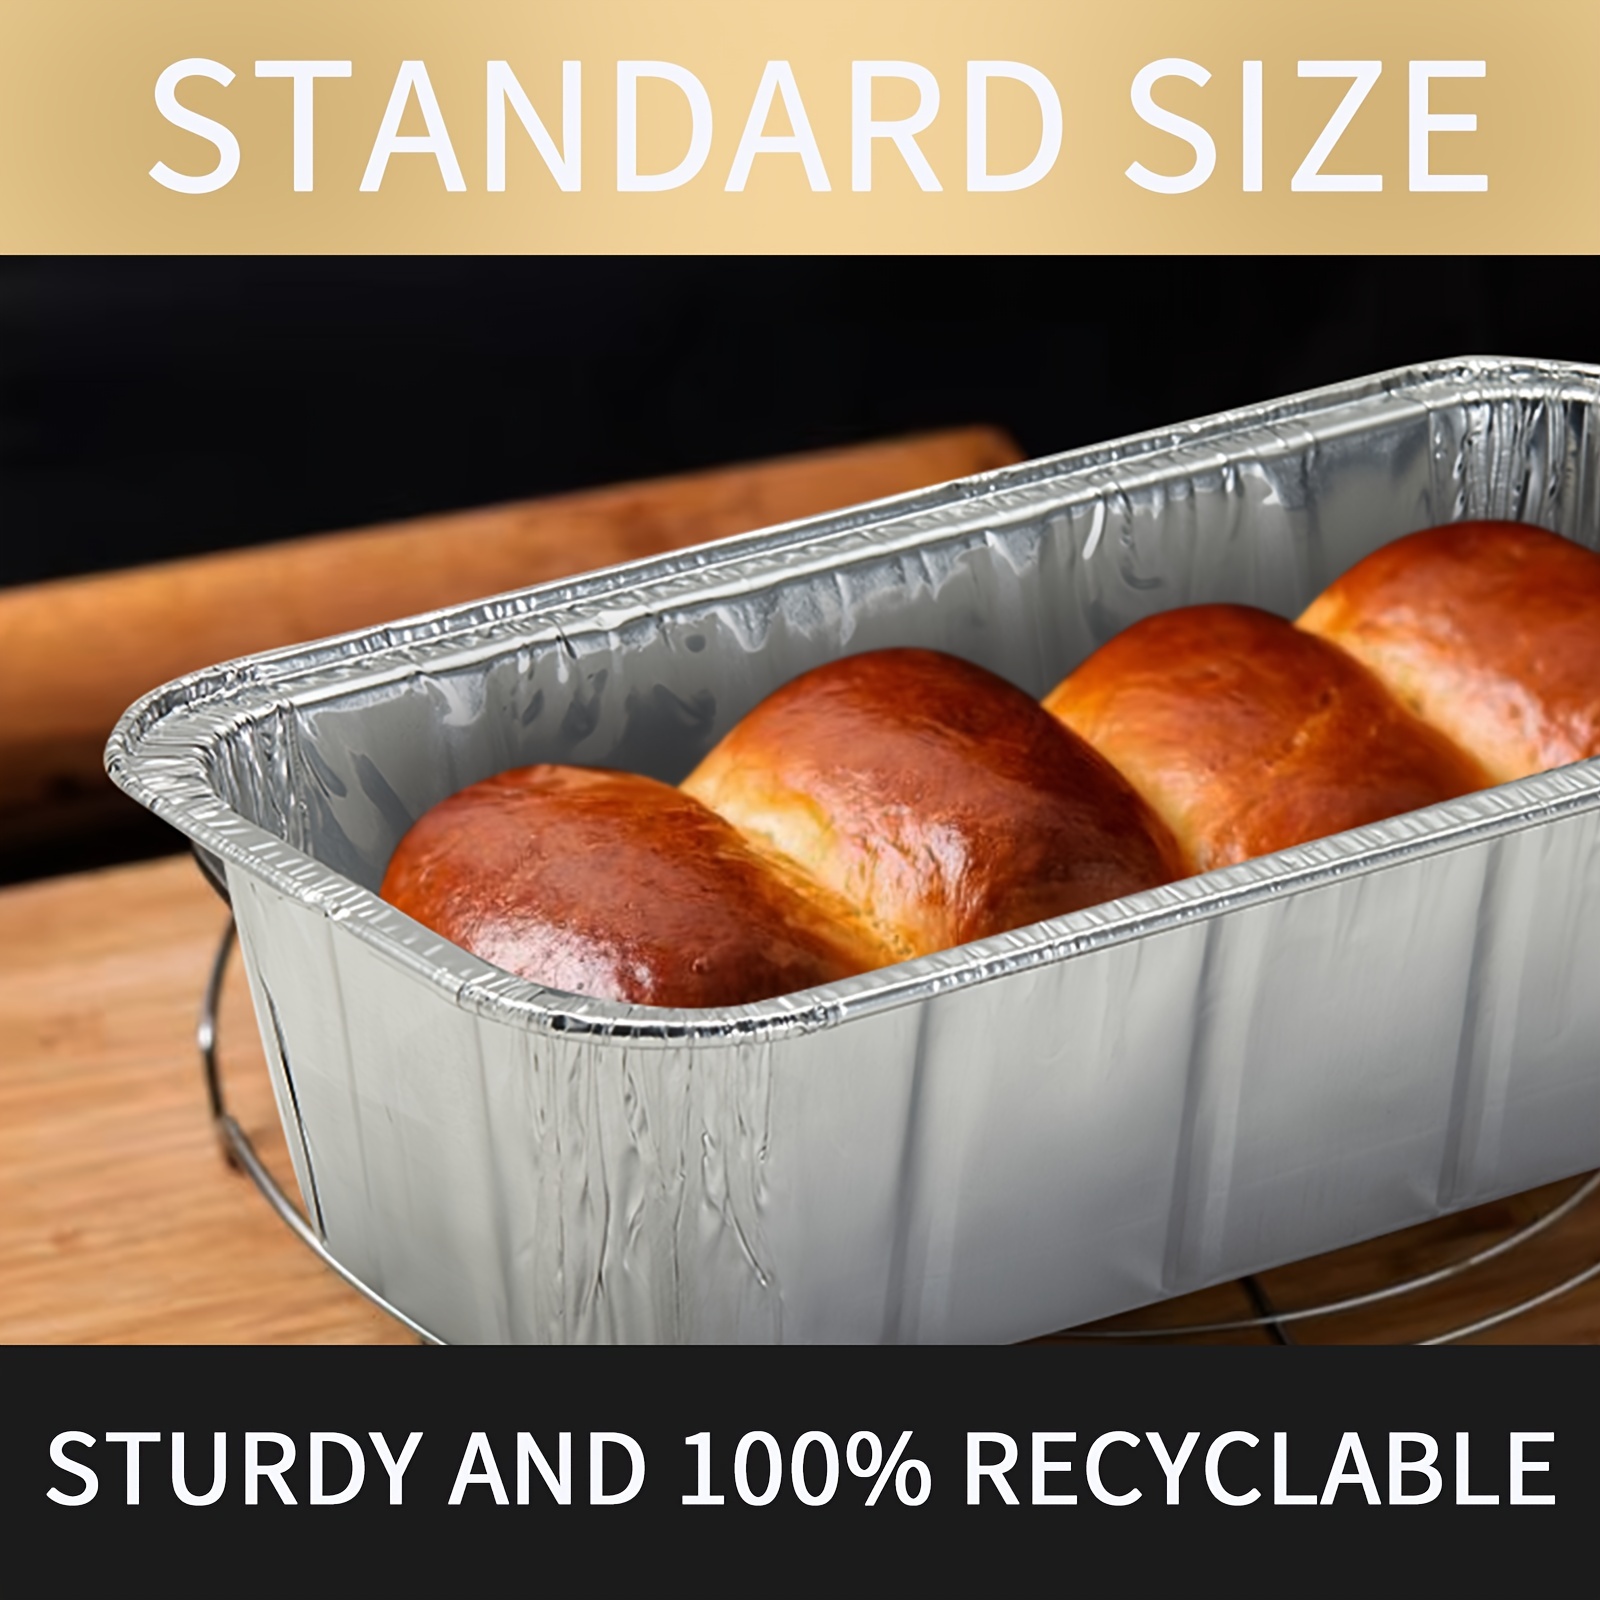 50 PC Aluminum Foil Lasagna Pan Disposable Loaf Bread Container Baking Tins New